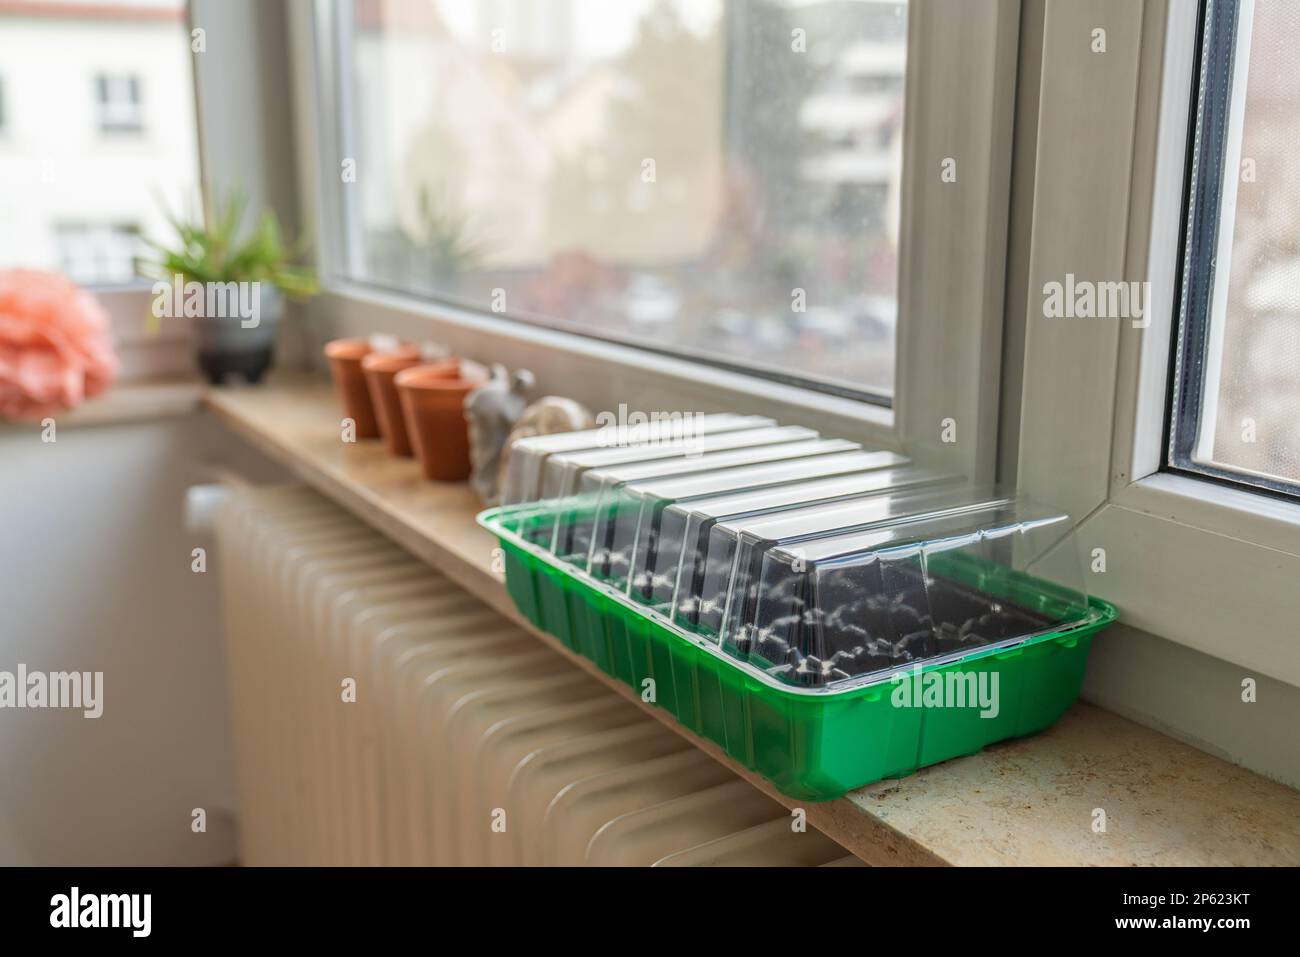 Mini greenhouse for seedlings on the windowsill. Stock Photo